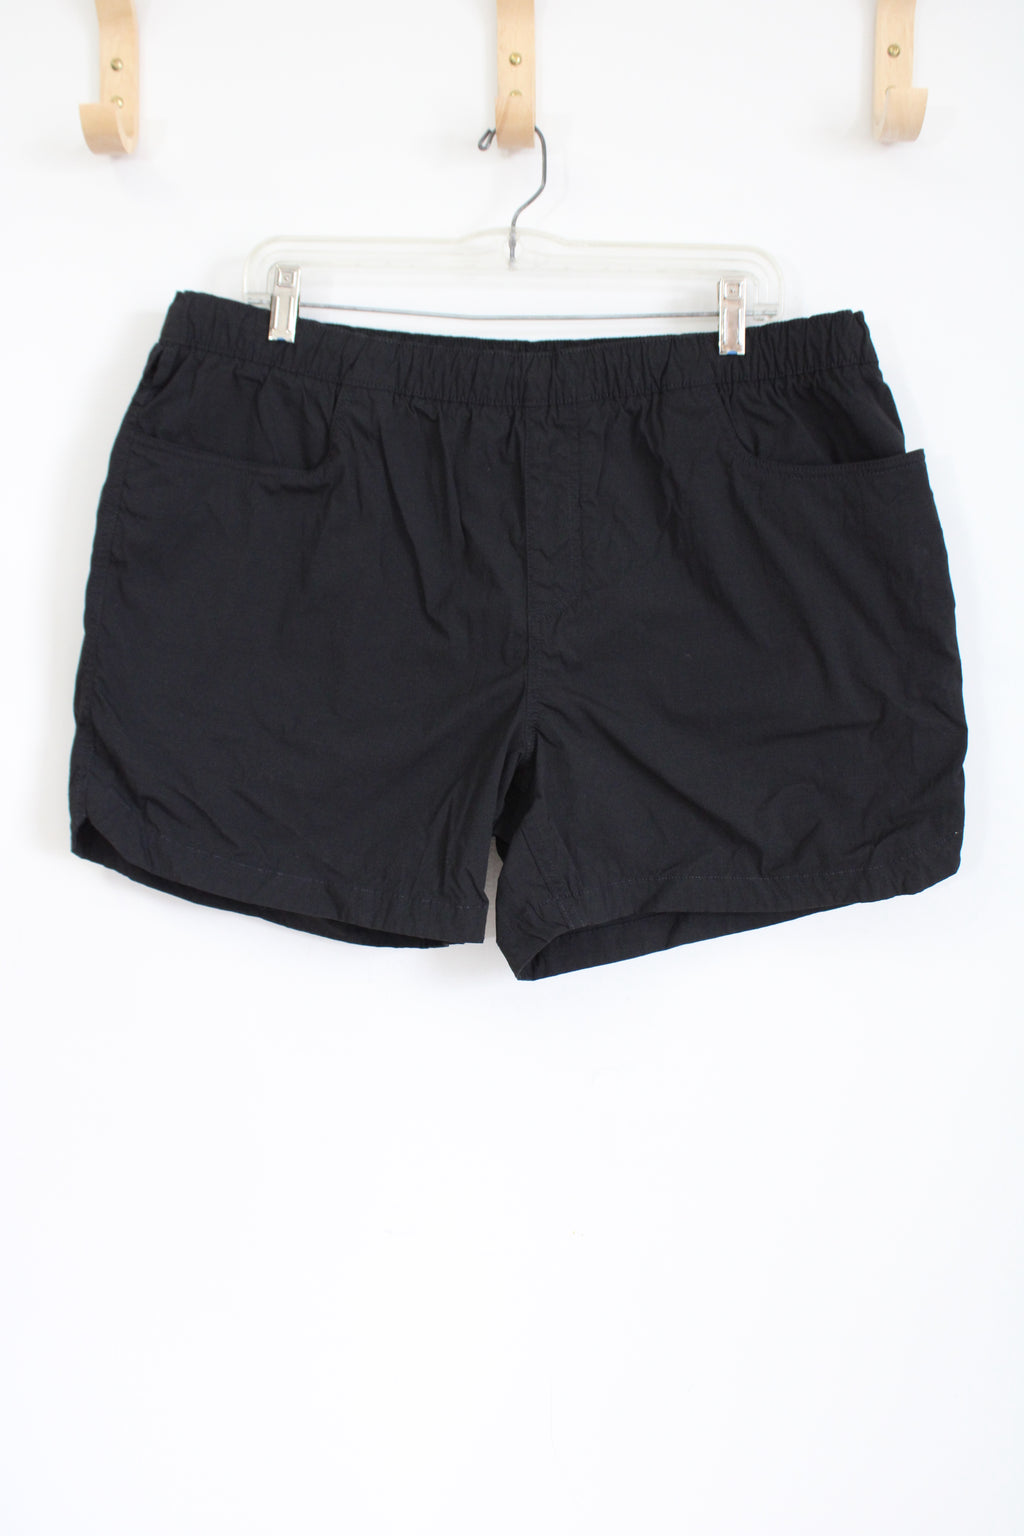 Carhartt Relaxed Fit Black Shorts | XL (16/18)